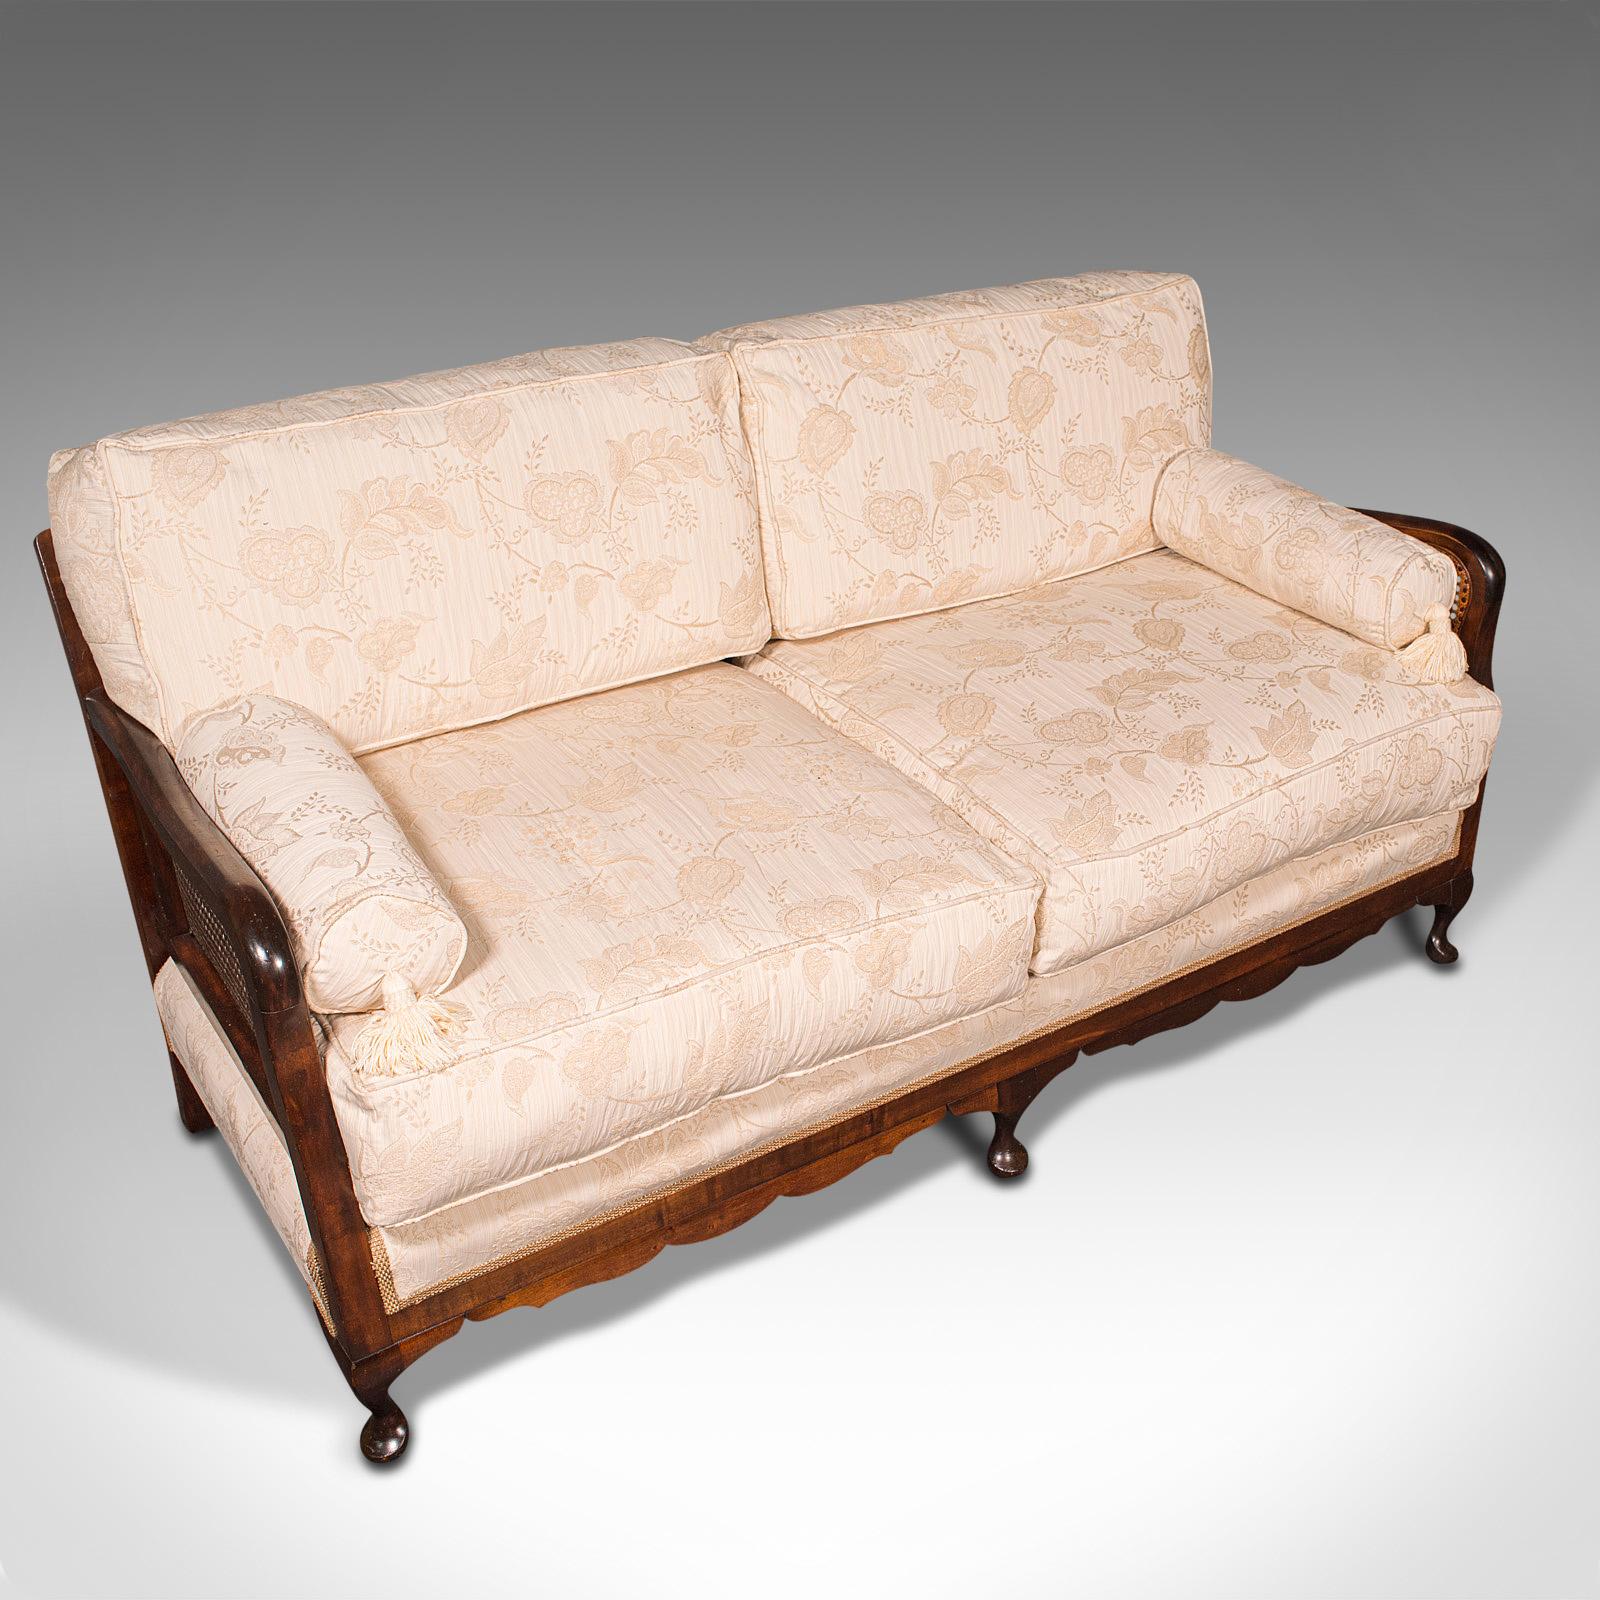 British Antique Bergere Sofa, English, Beech, Cane, 2 Seat Settee, Edwardian, Circa 1910